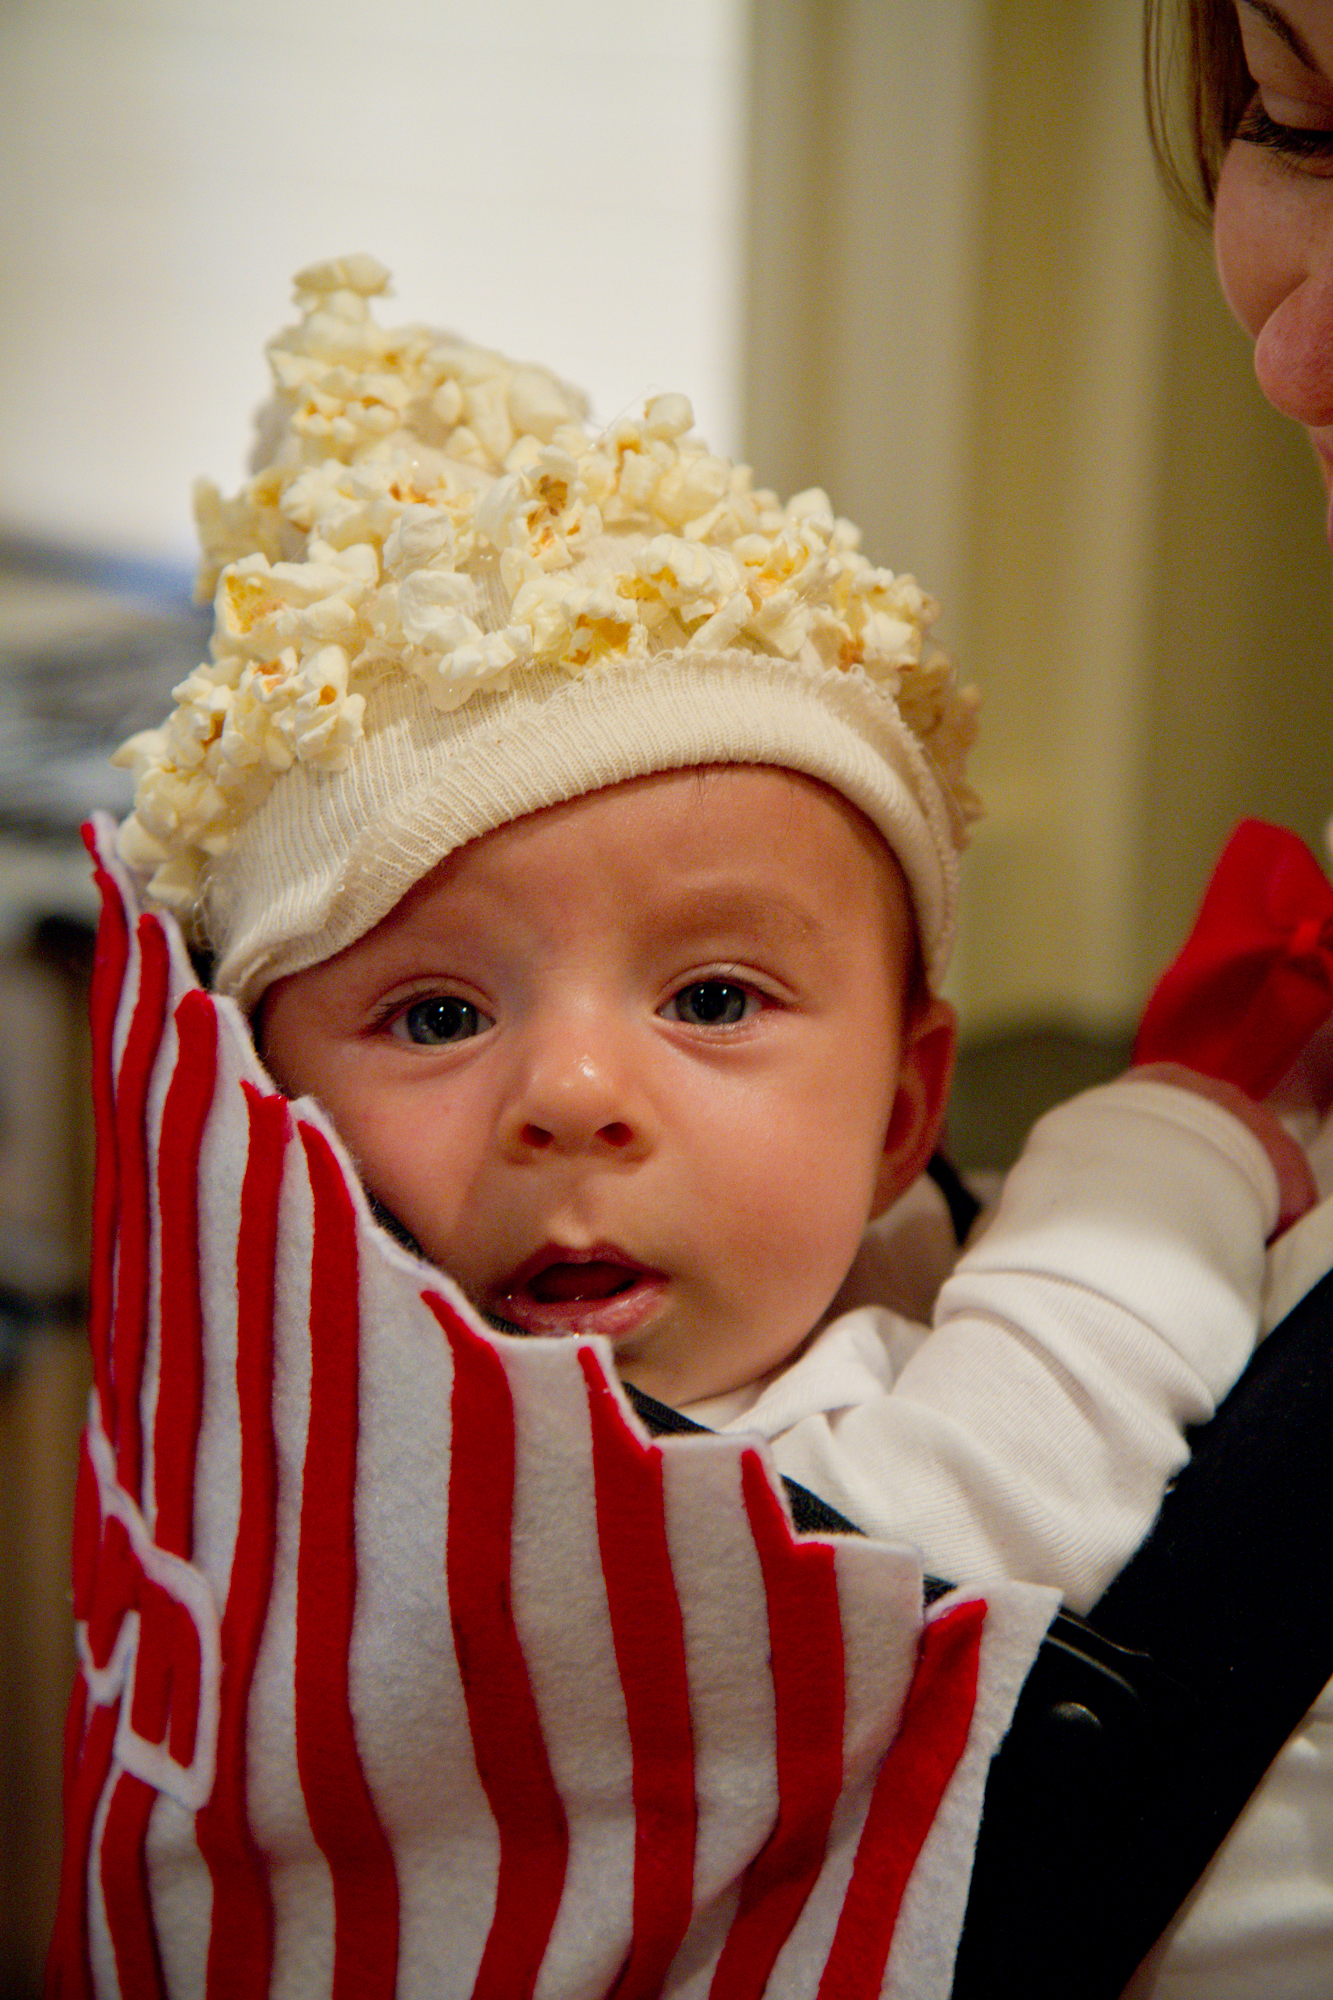 baby in popcorn box costume